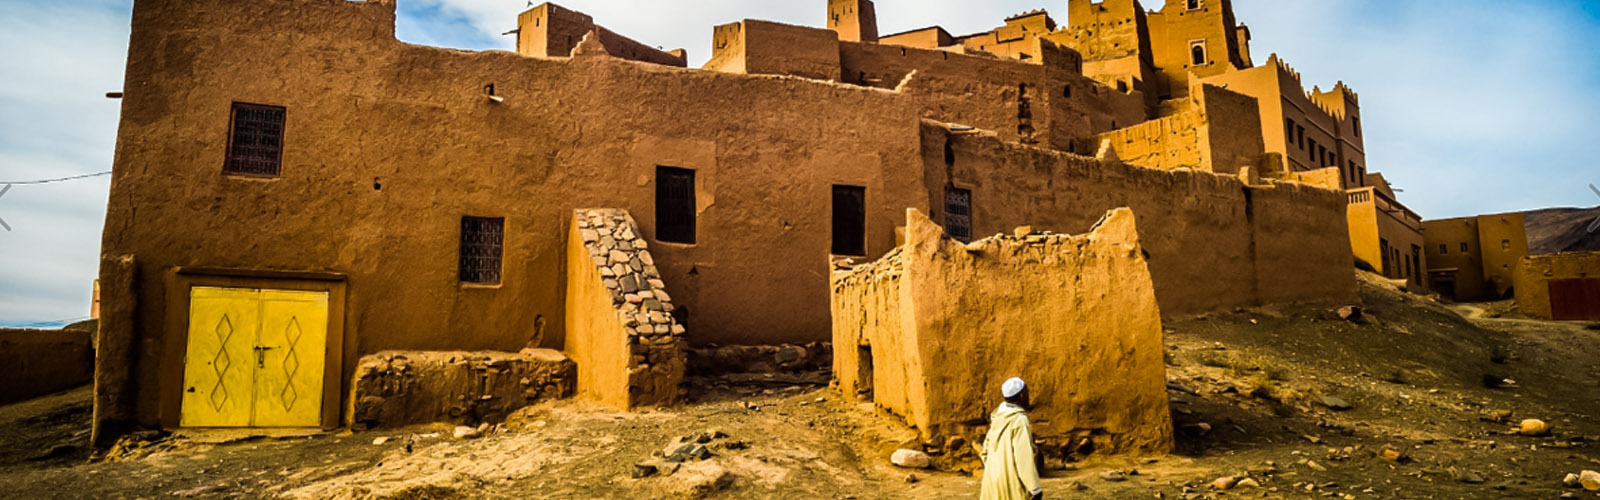 berbers in morocco